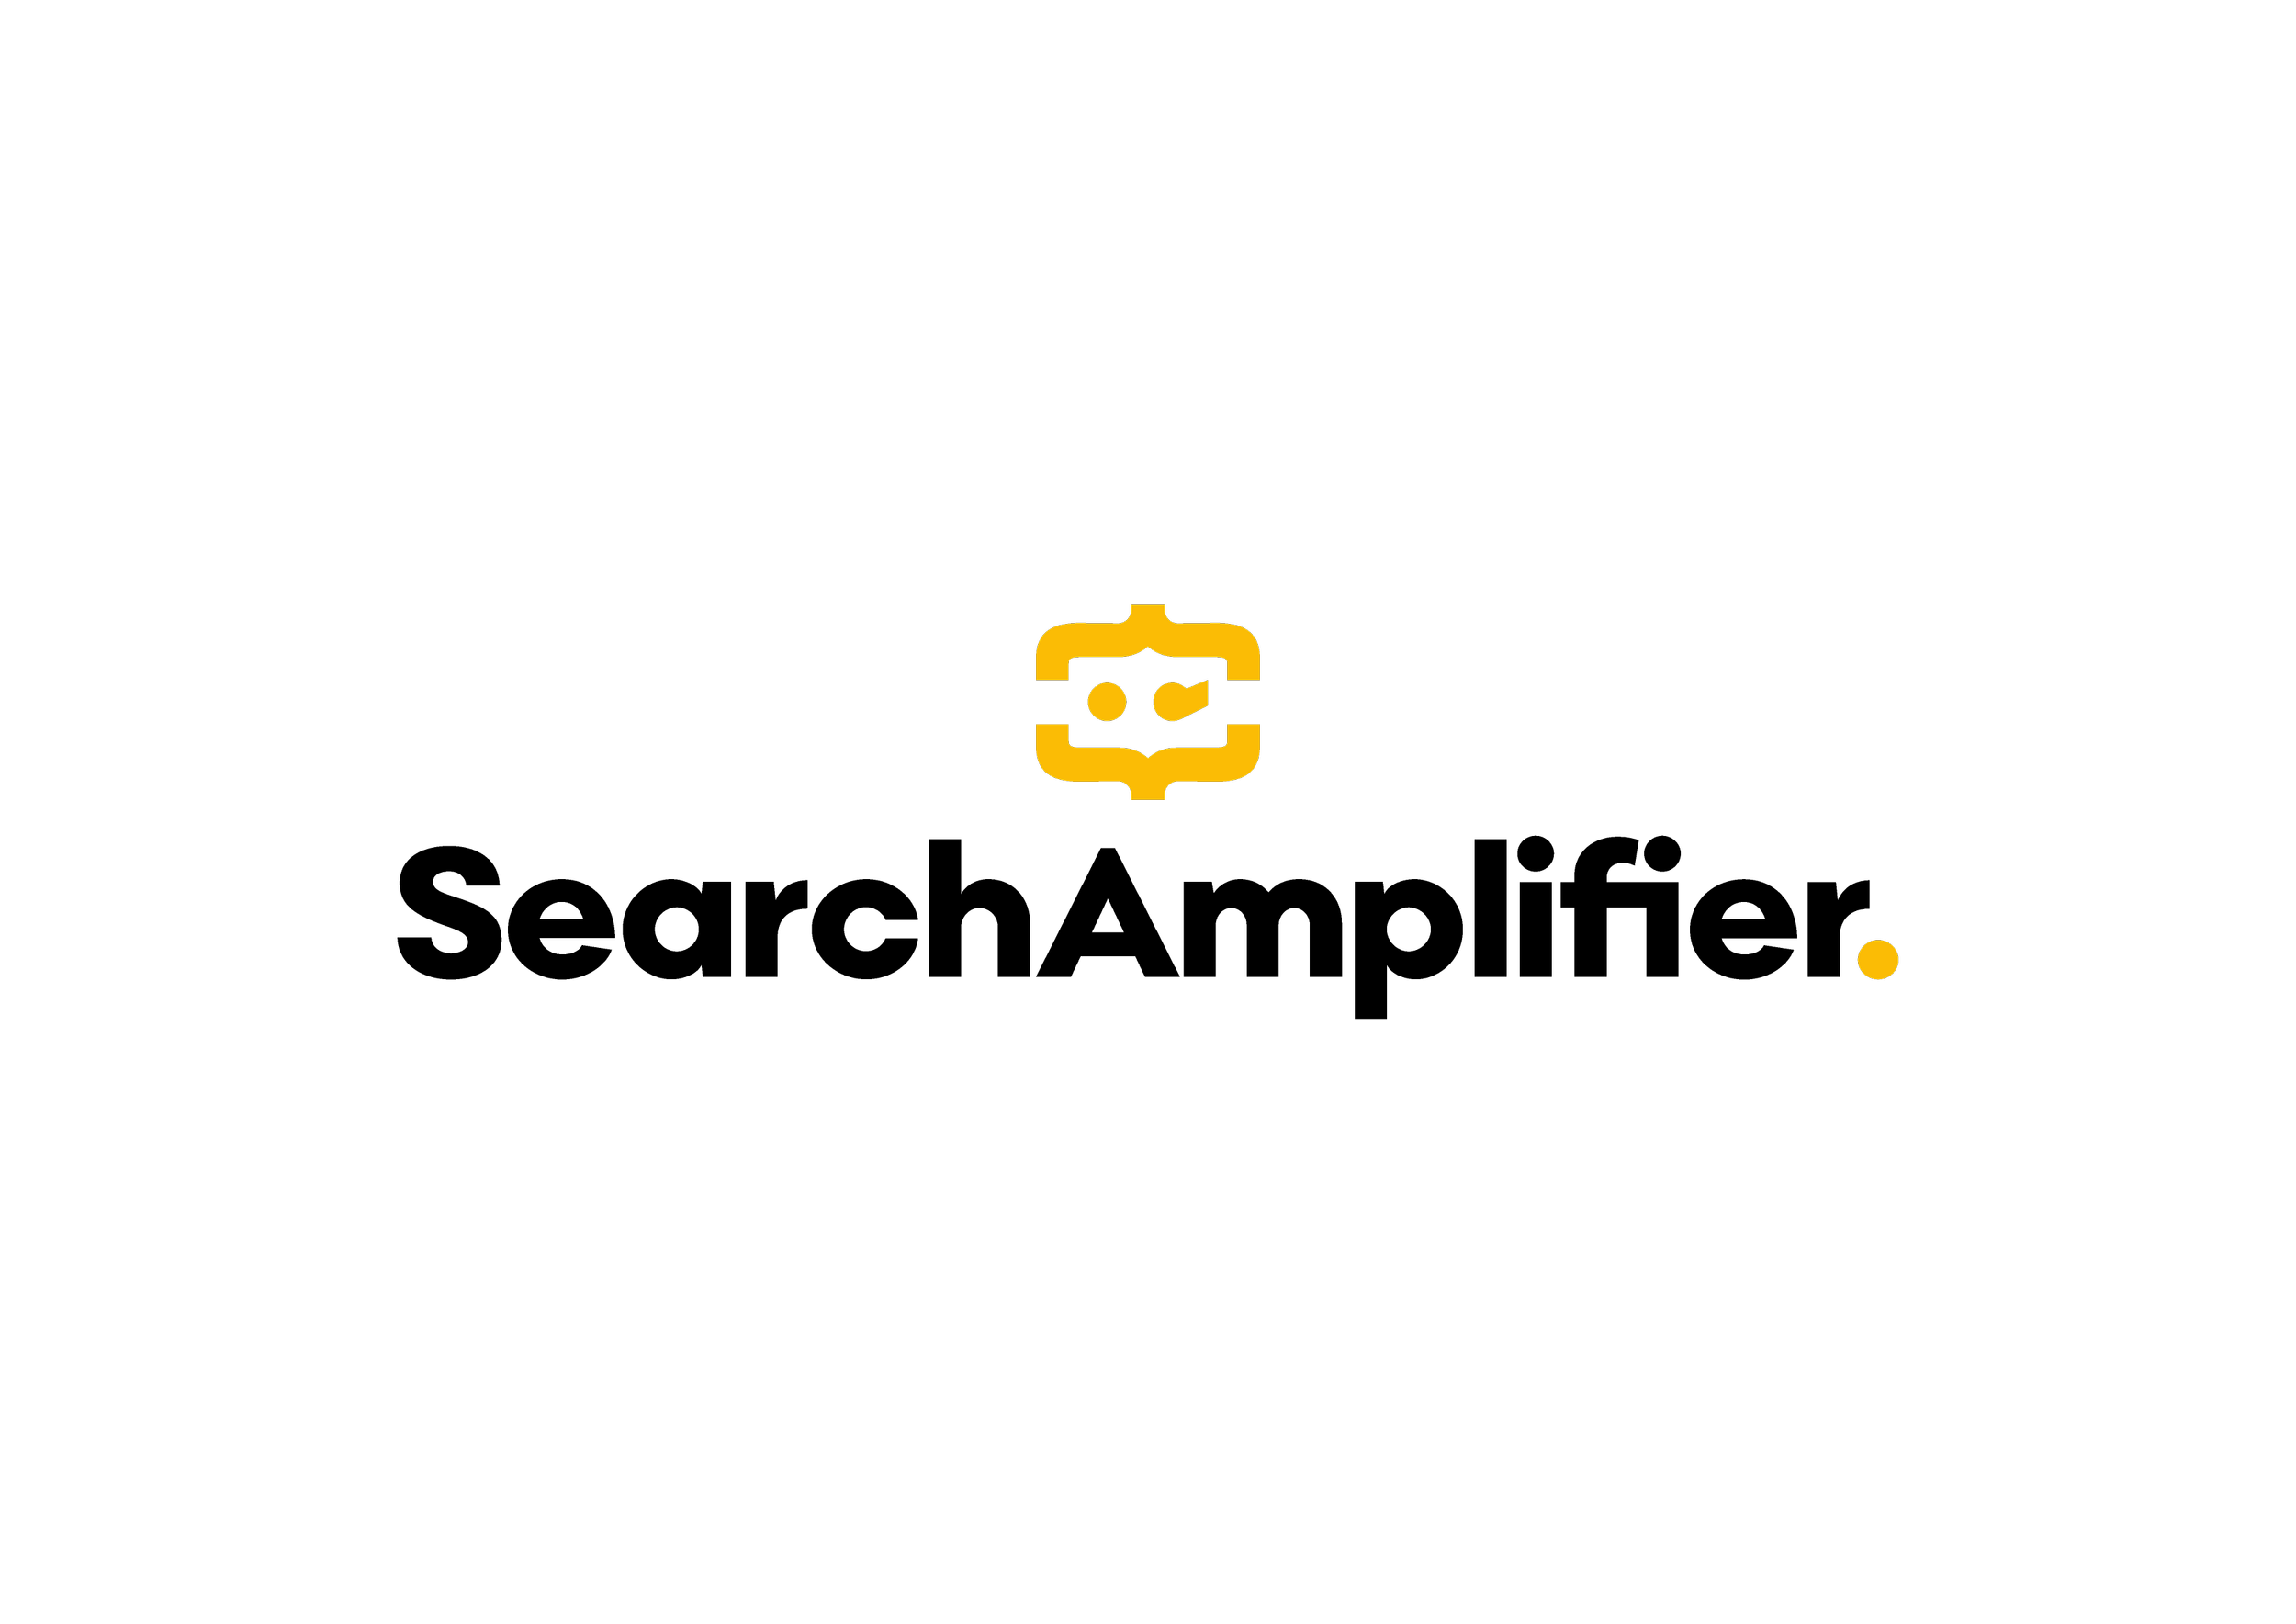 Logo SearchAmplifier-RVB-300dpi_V1.png